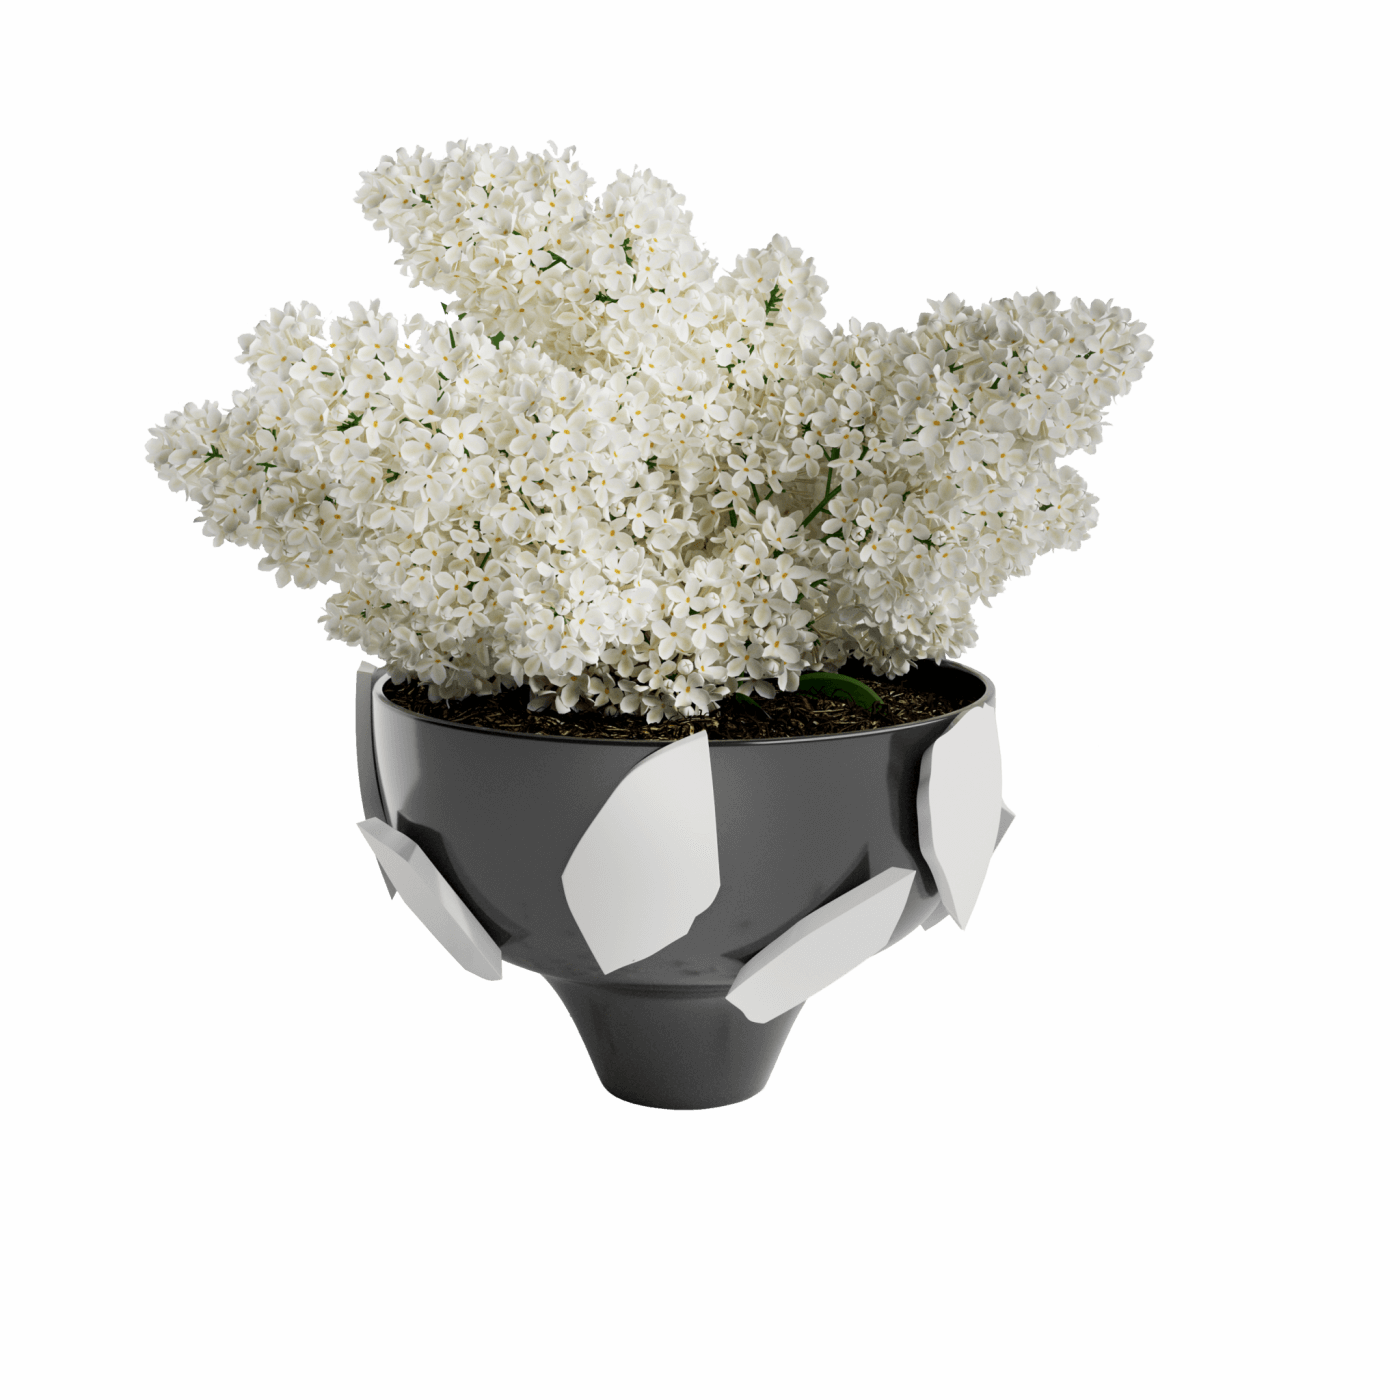 Ultimate Gift Guide - Vase